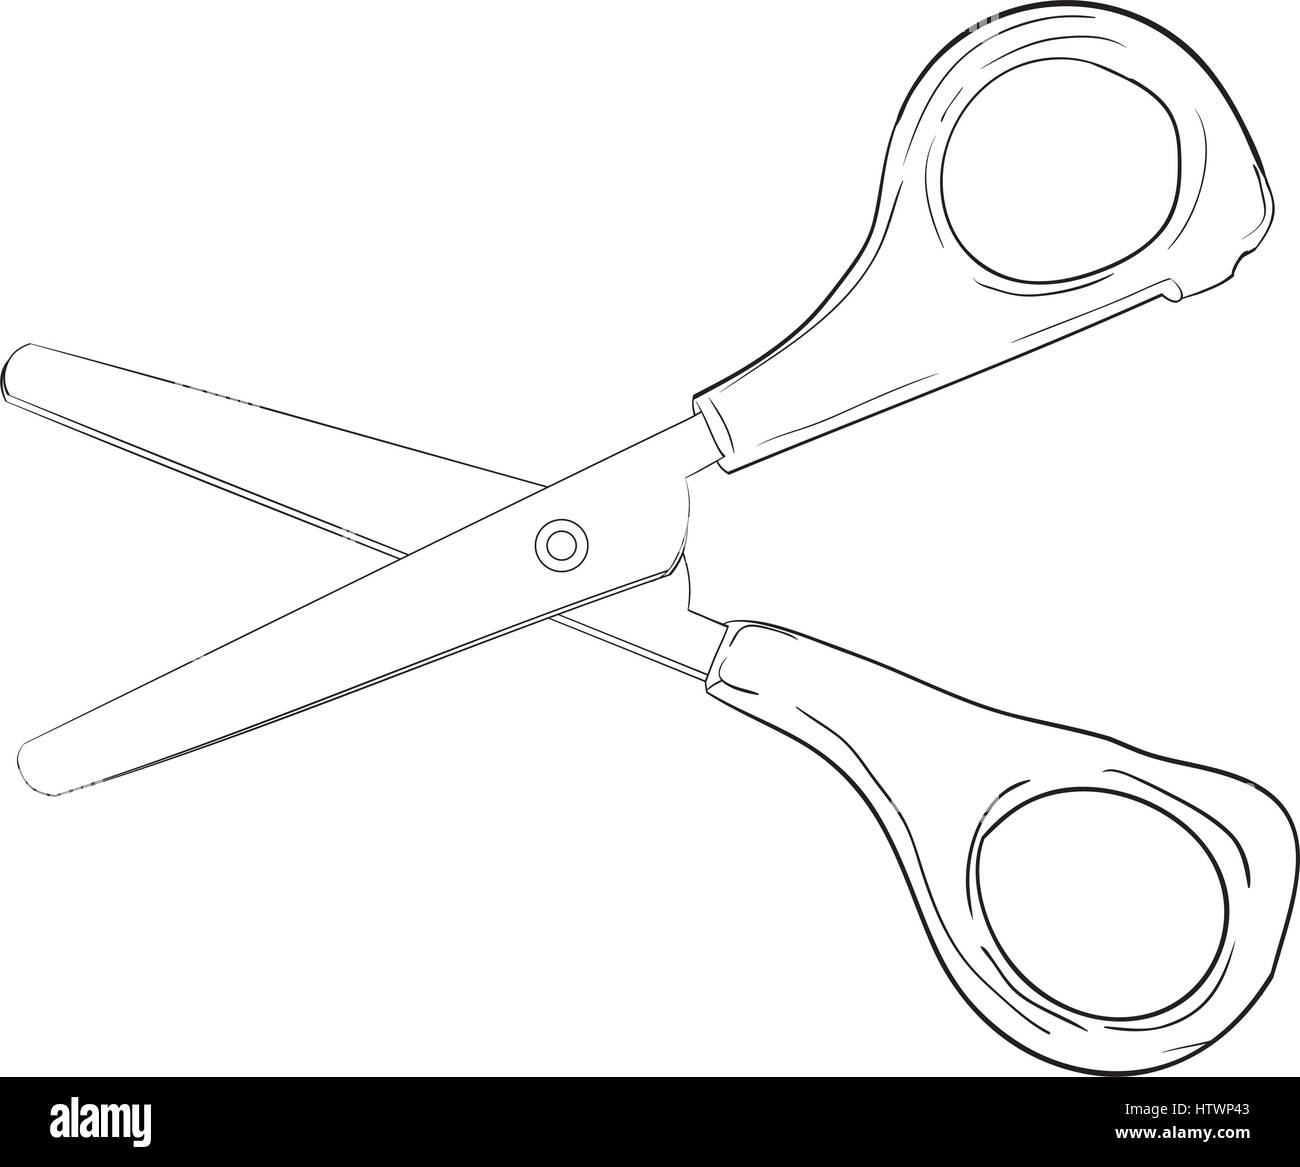 Cartoon scissors Black and White Stock Photos & Images - Alamy